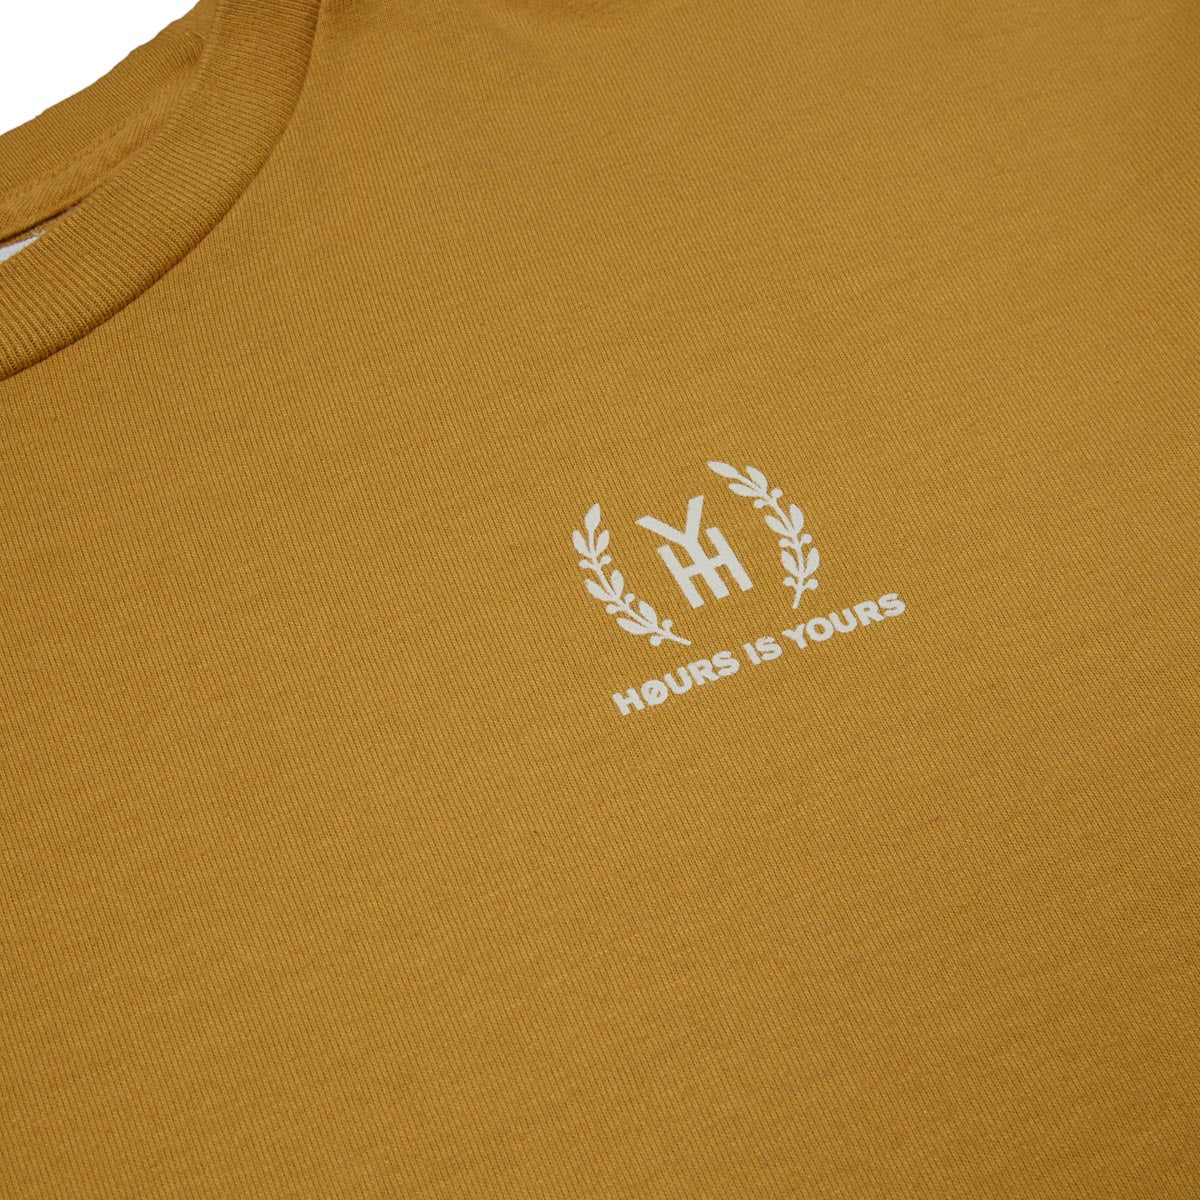 Vinatge Gold Hours Is Yours Monogram T-Shirt